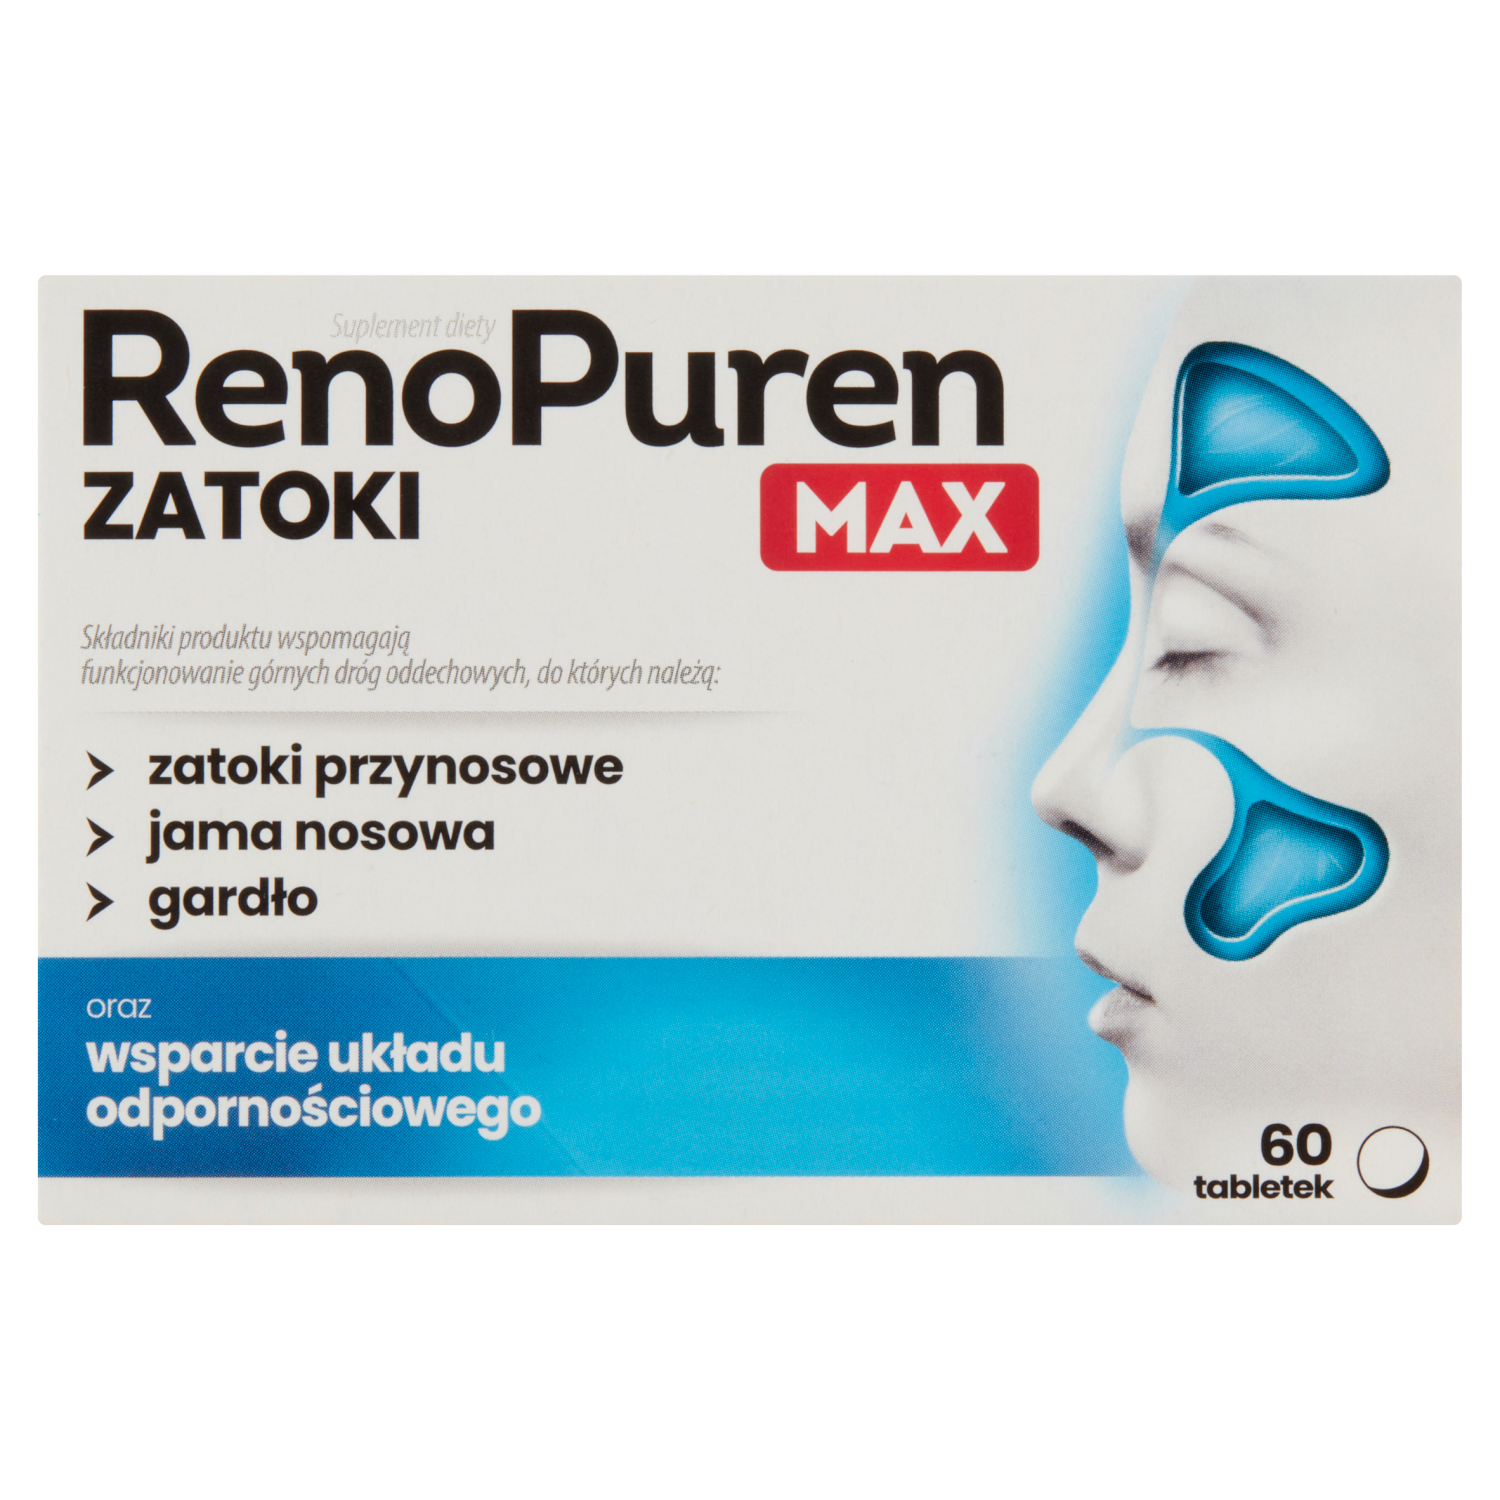 vita miner prenatal биологически активная добавка 60 таблеток 1 упаковка Renopuren Zatoki Max биологически активная добавка, 60 таблеток/1 упаковка